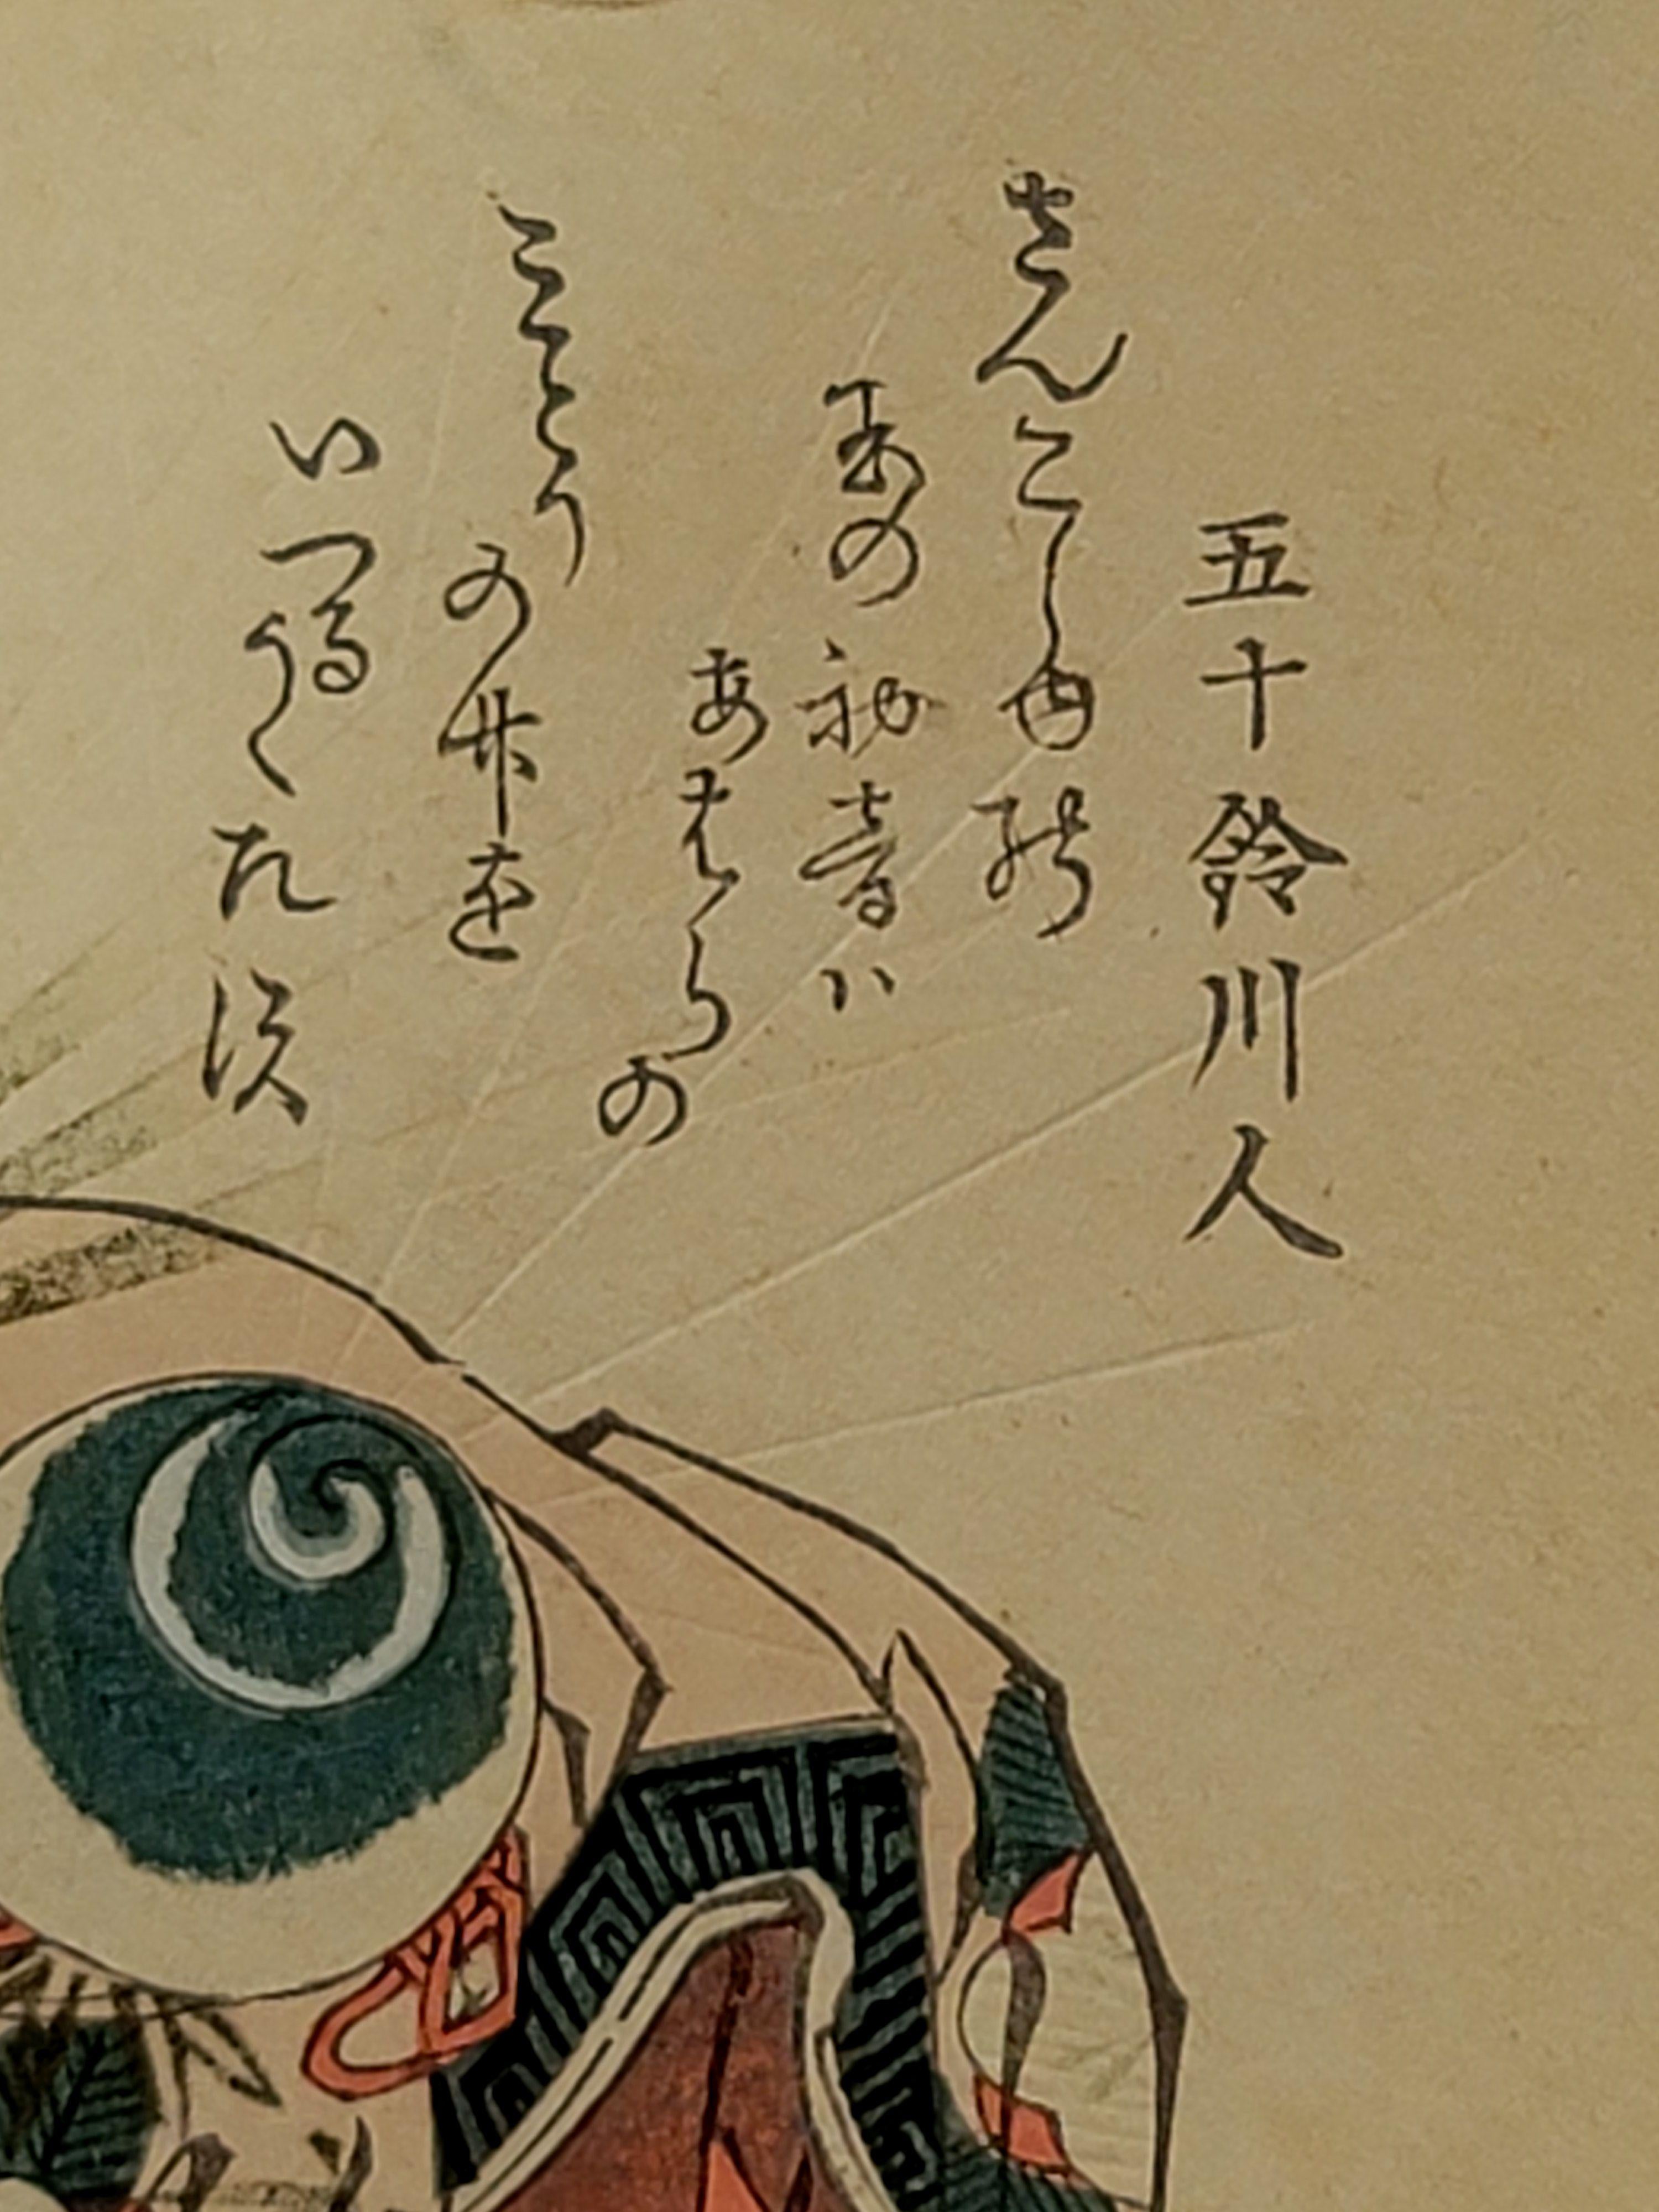 when was hokusai born